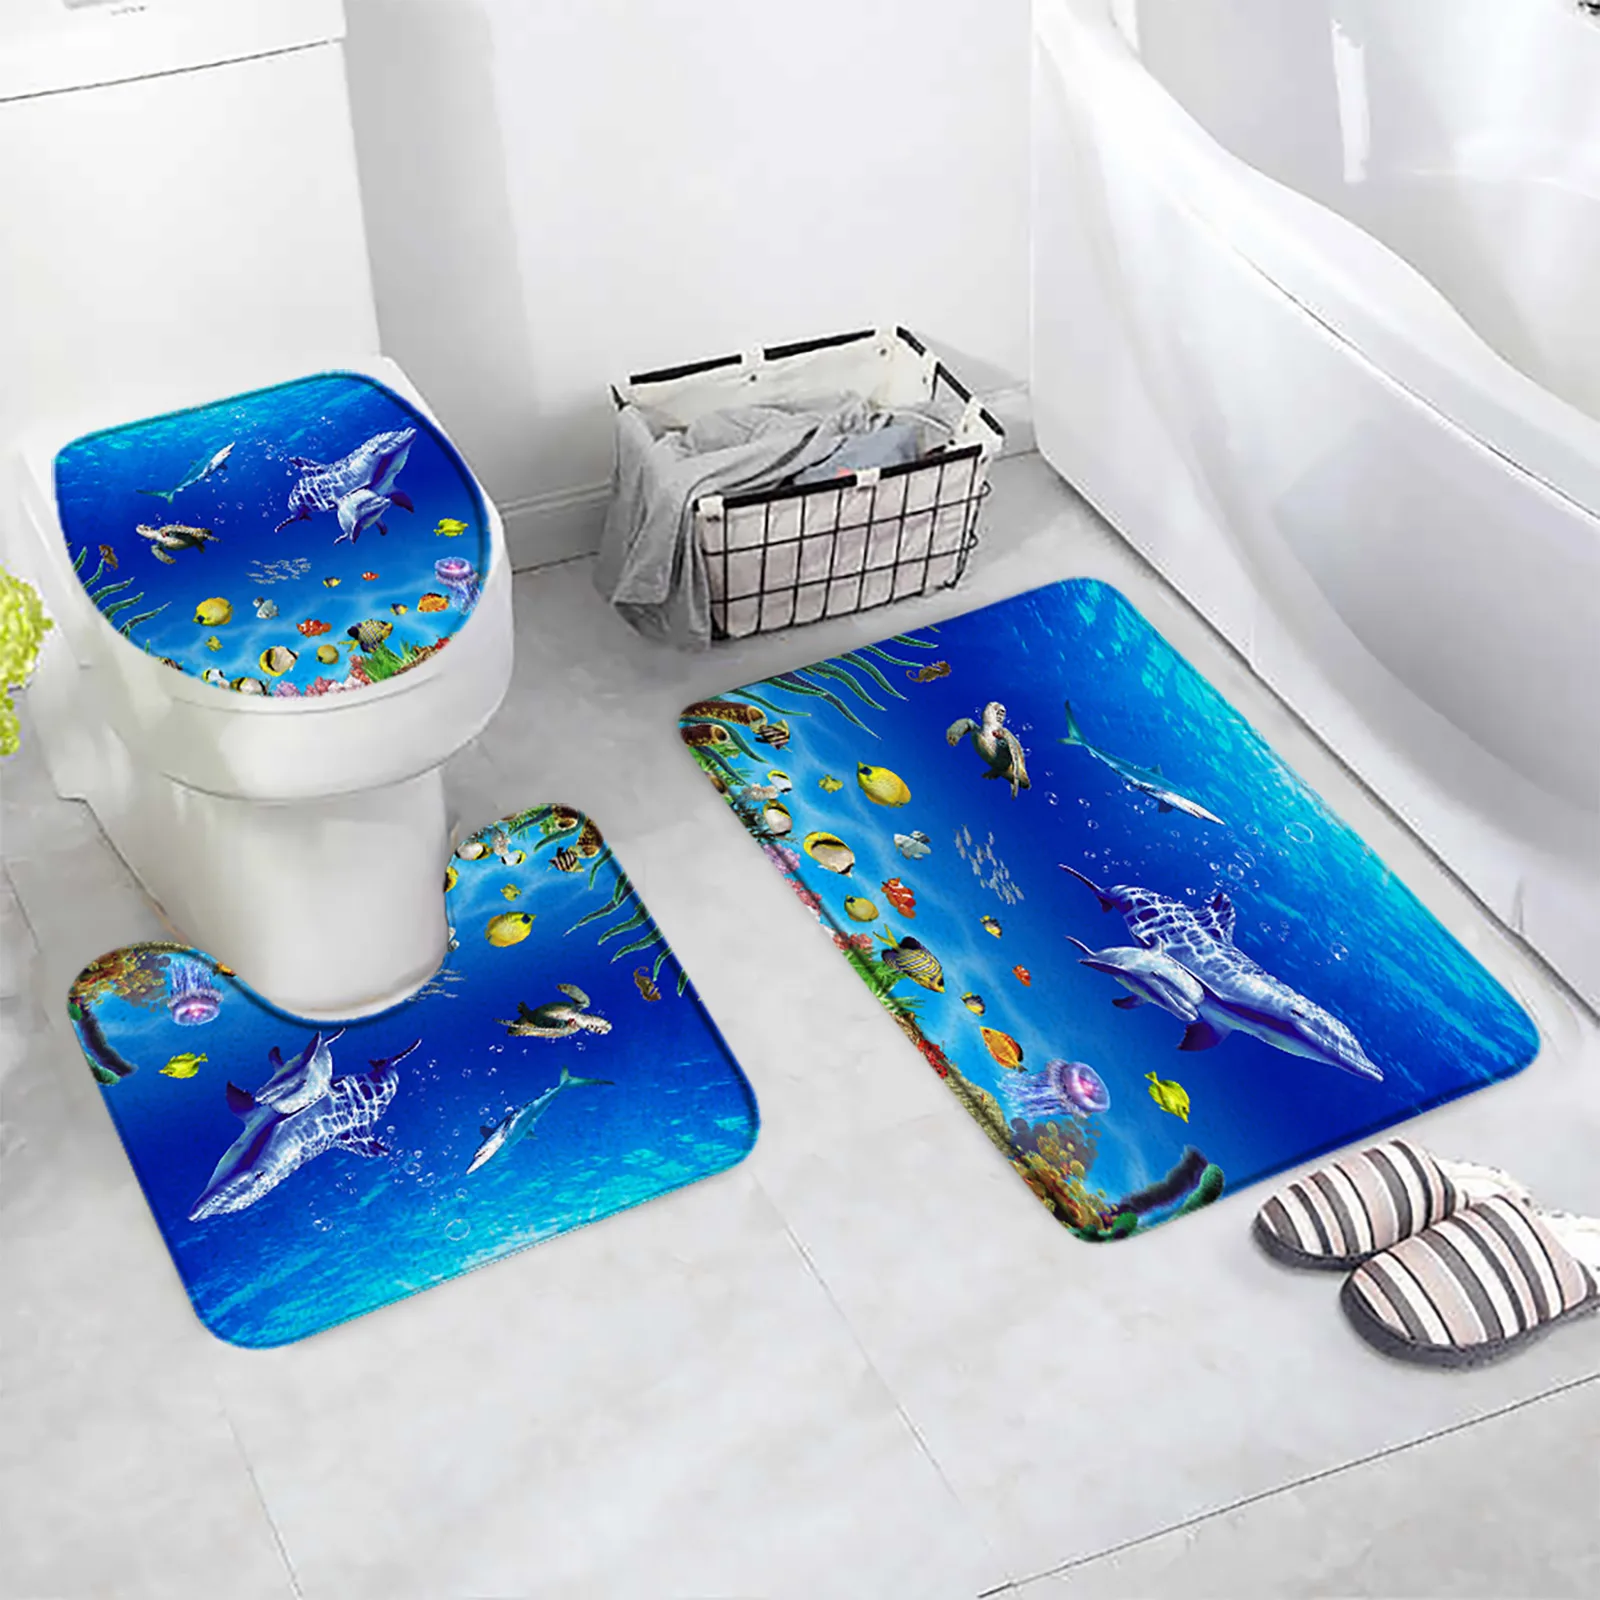 

Ocean Dolphin Scenery Bath Mat Marine Animal Palm Trees Beach Landscape Decor Anti Slip Rugs Toilet Lid Bathroom Accessories Set